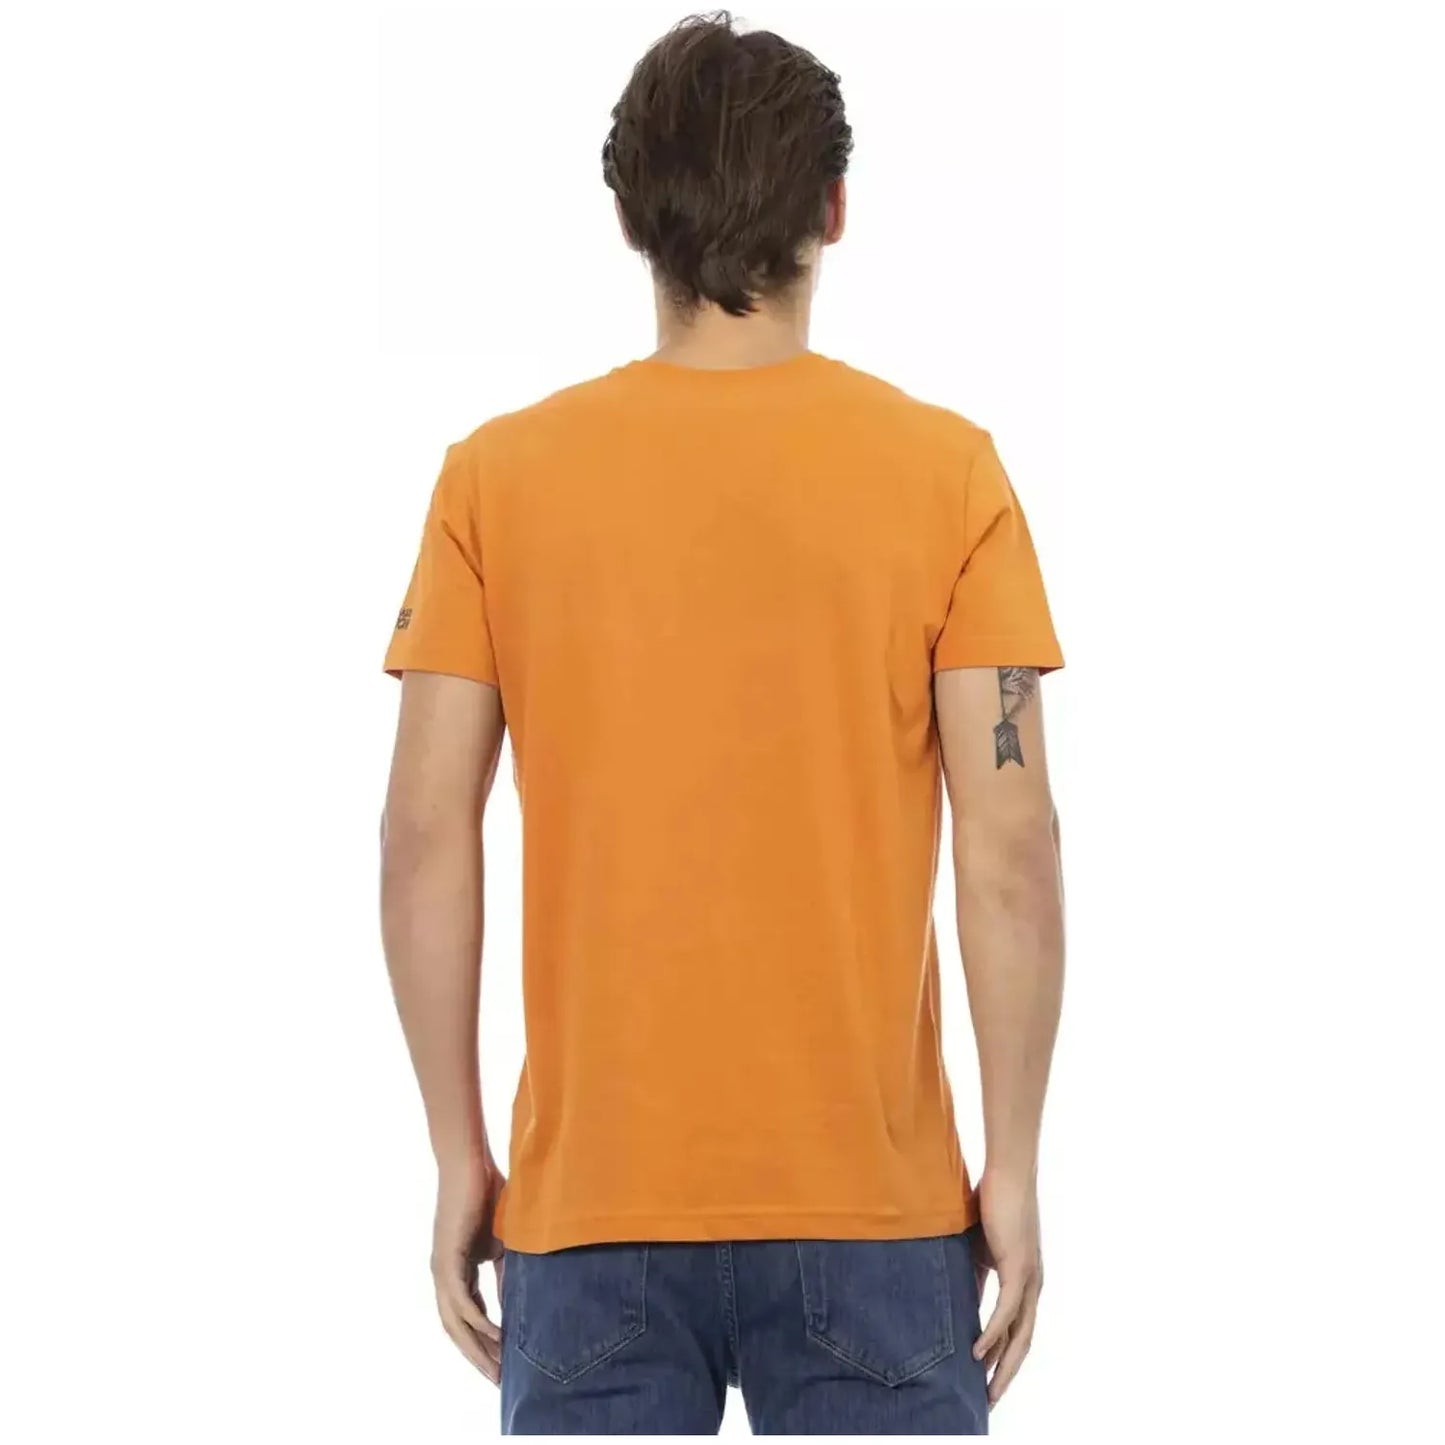 Trussardi ActionVibrant Orange V-Neck Tee with Sleek PrintMcRichard Designer Brands£59.00